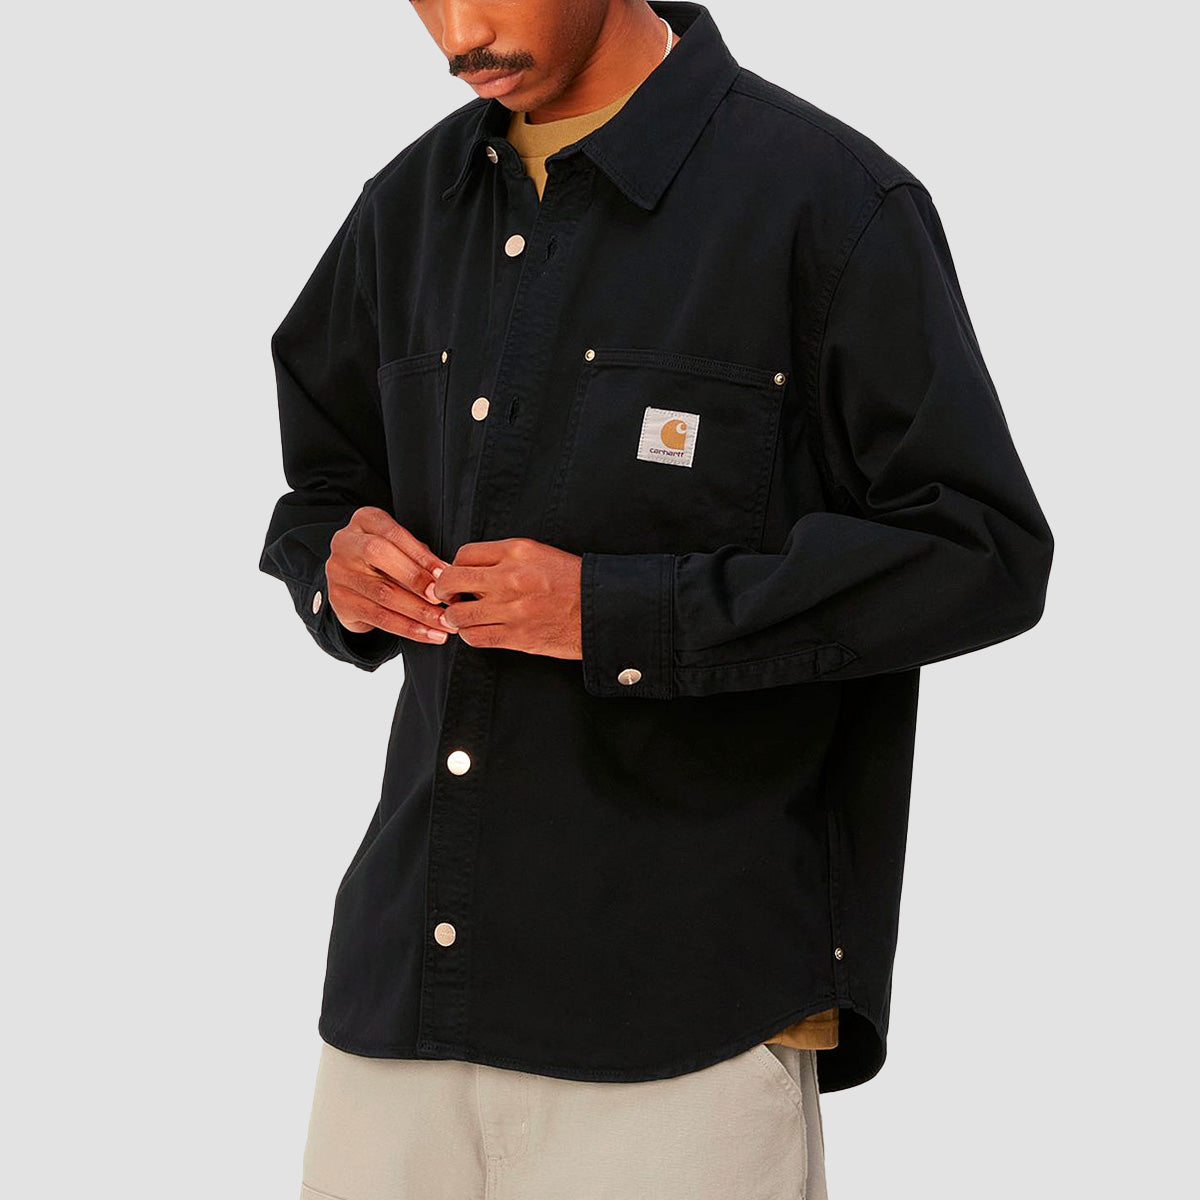 Carhartt WIP Derby Shirt Jacket Black